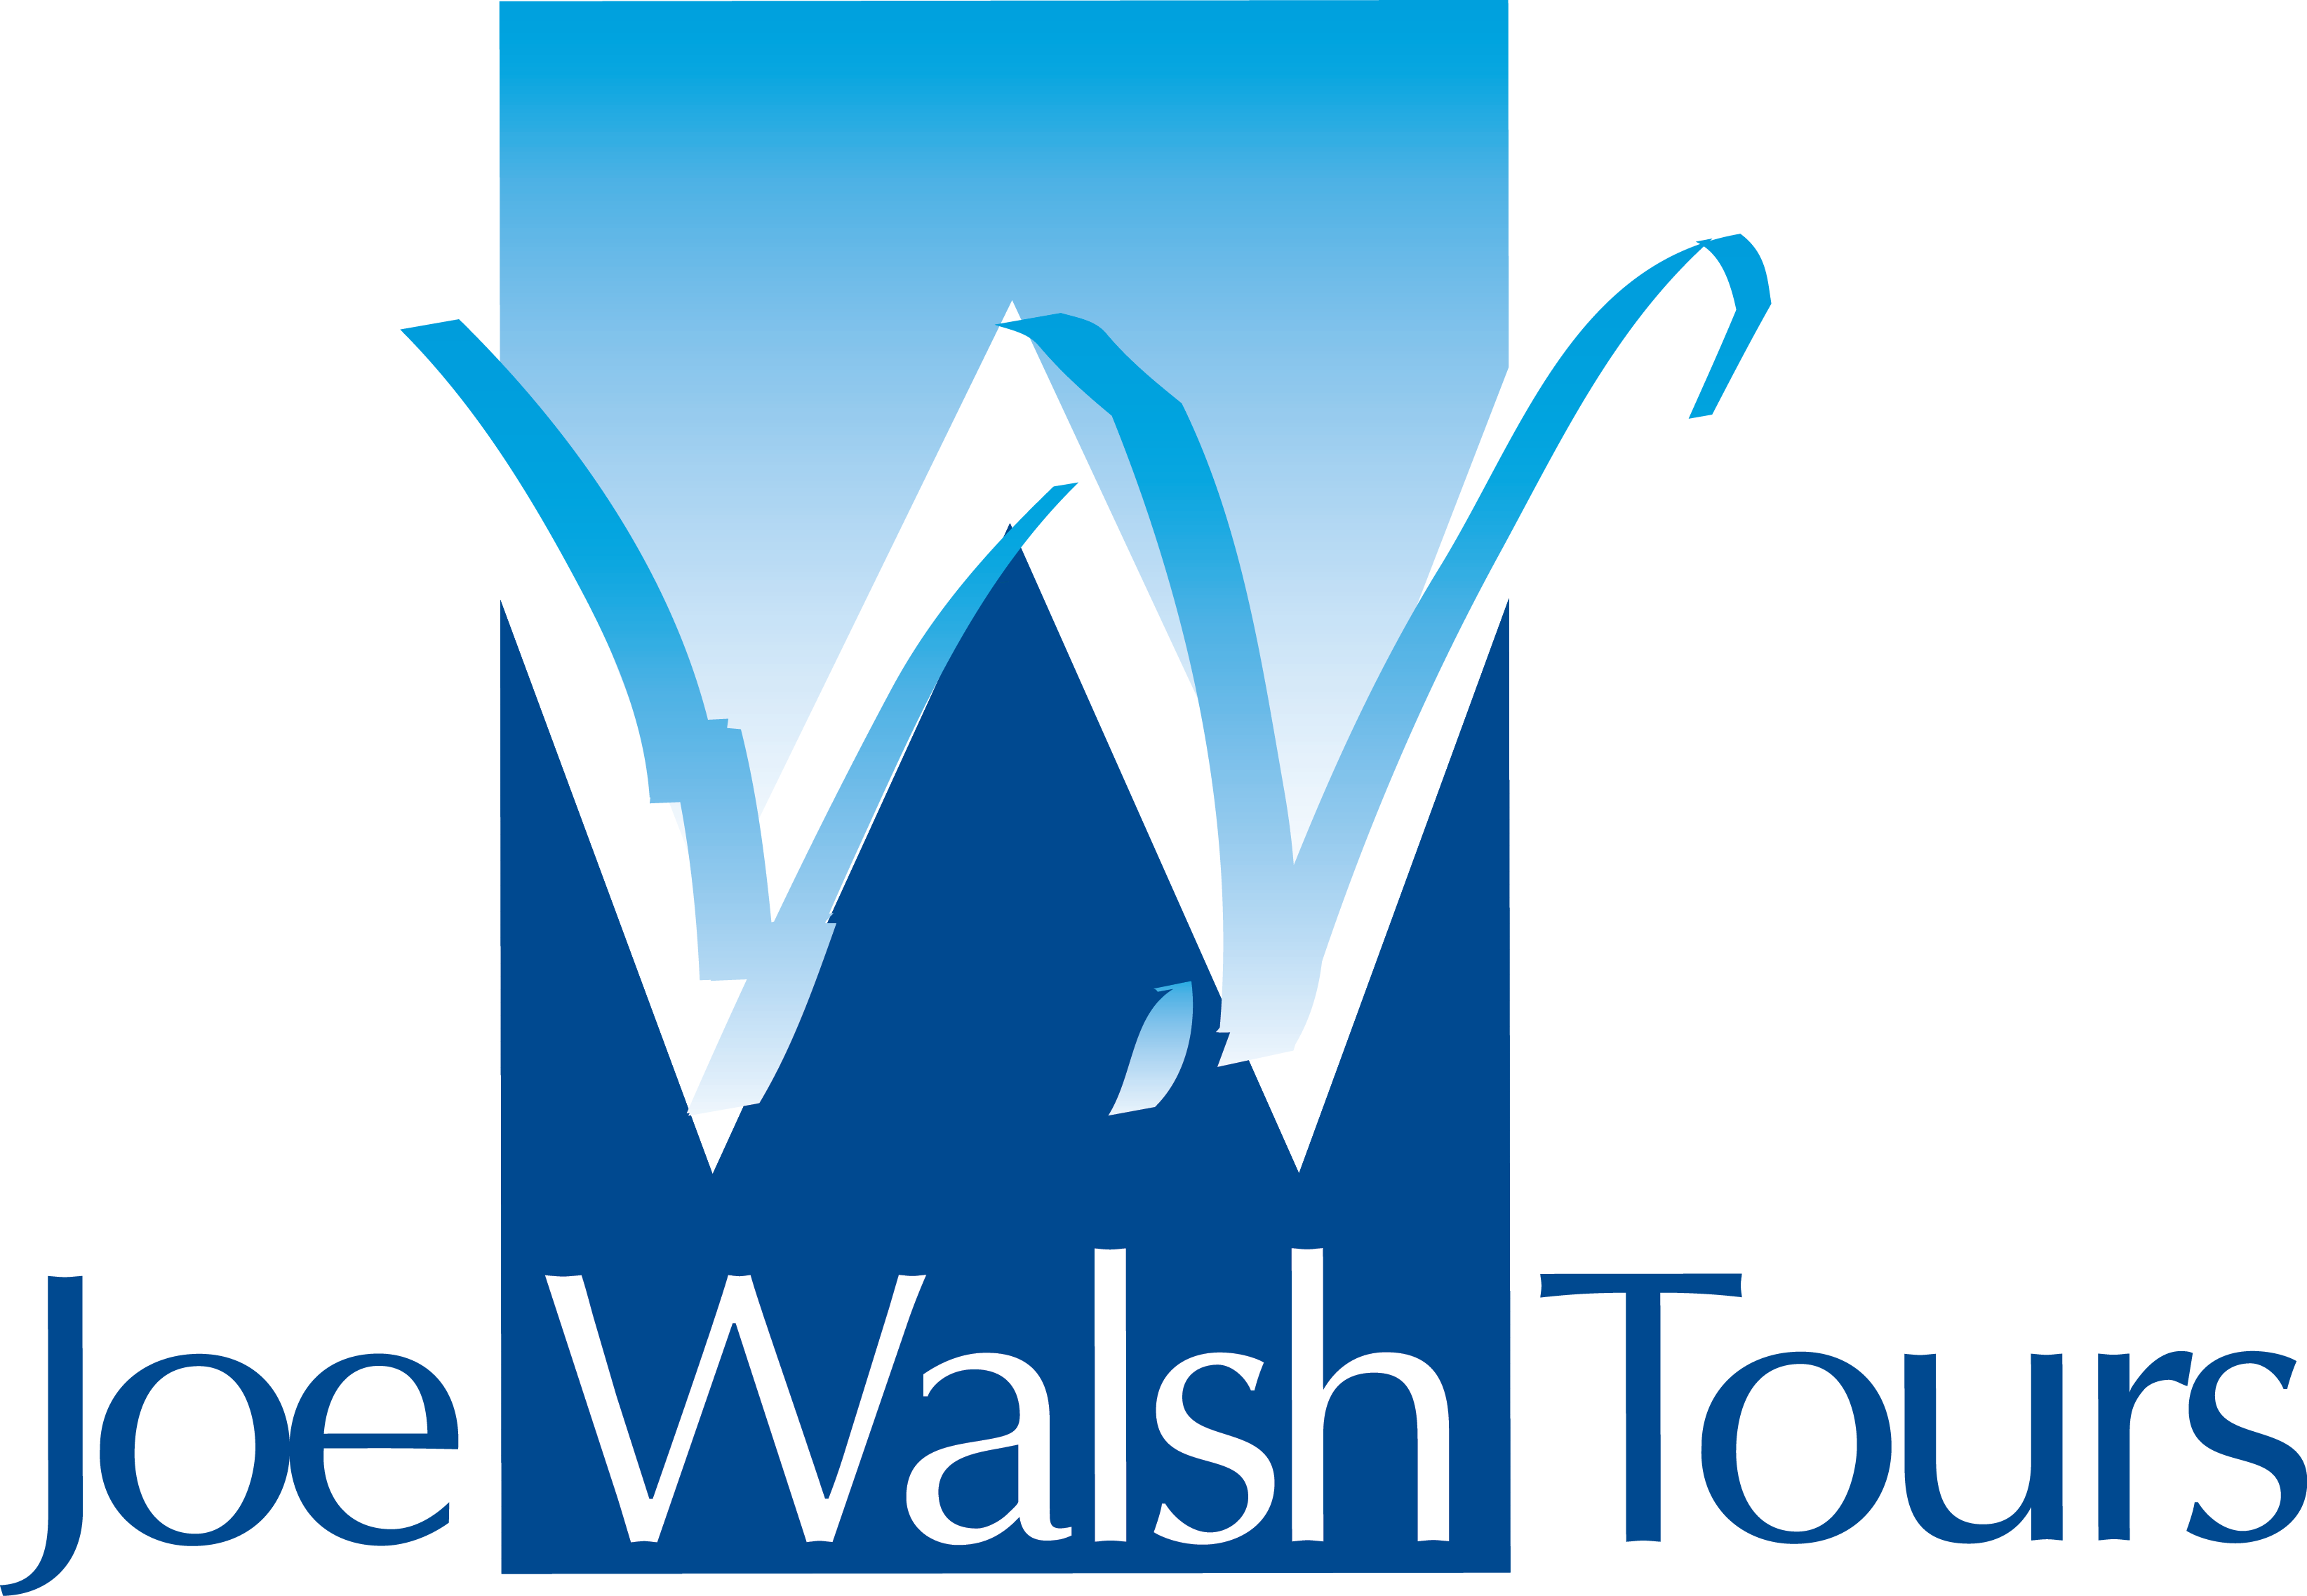 Joe Walsh Tours logo